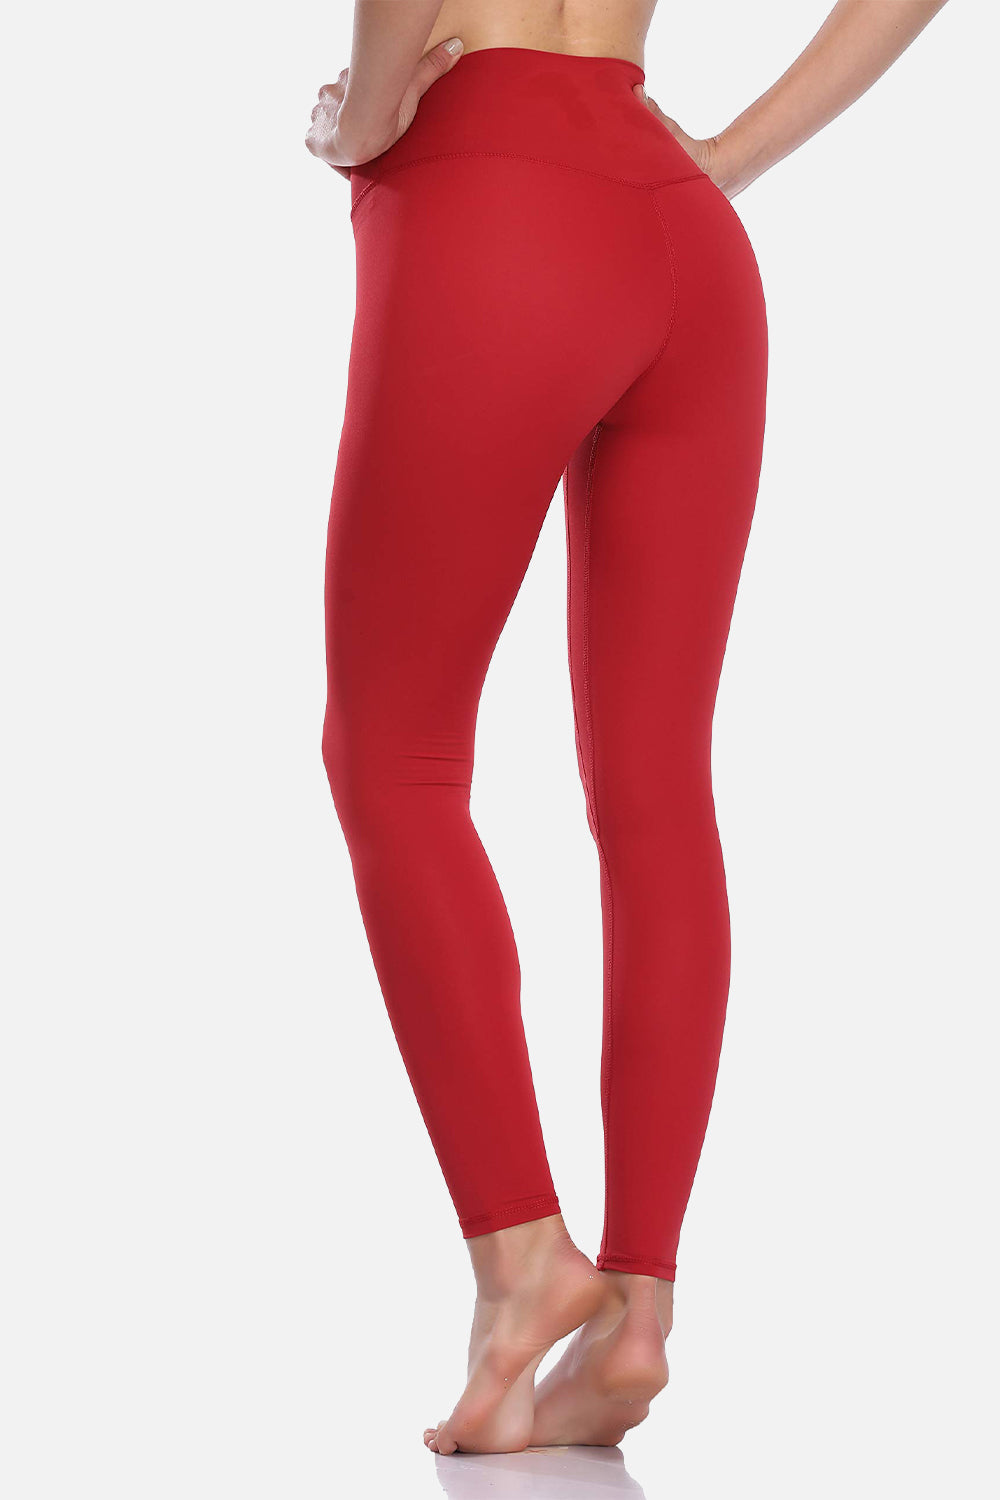 GetUSCart- Colorfulkoala Women's Buttery Soft High Waisted Yoga Pants  Full-Length Leggings (XS, Titanium Grey)